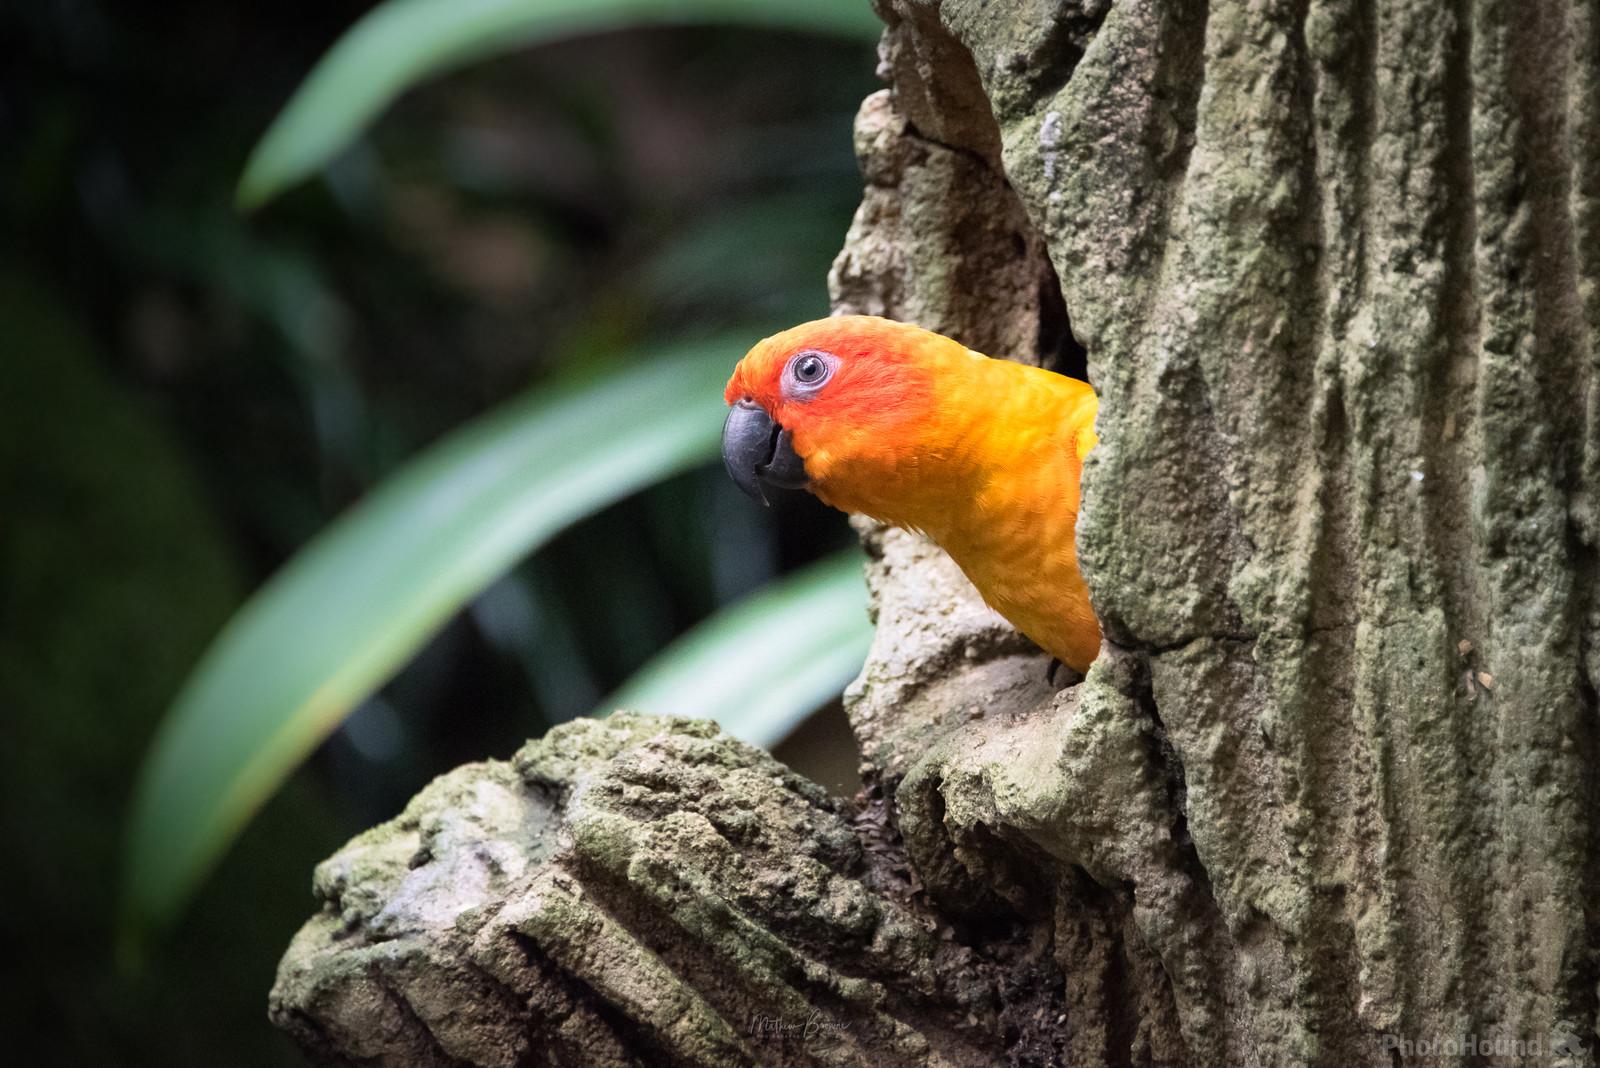 Image of Jurong Bird Park by Mathew Browne